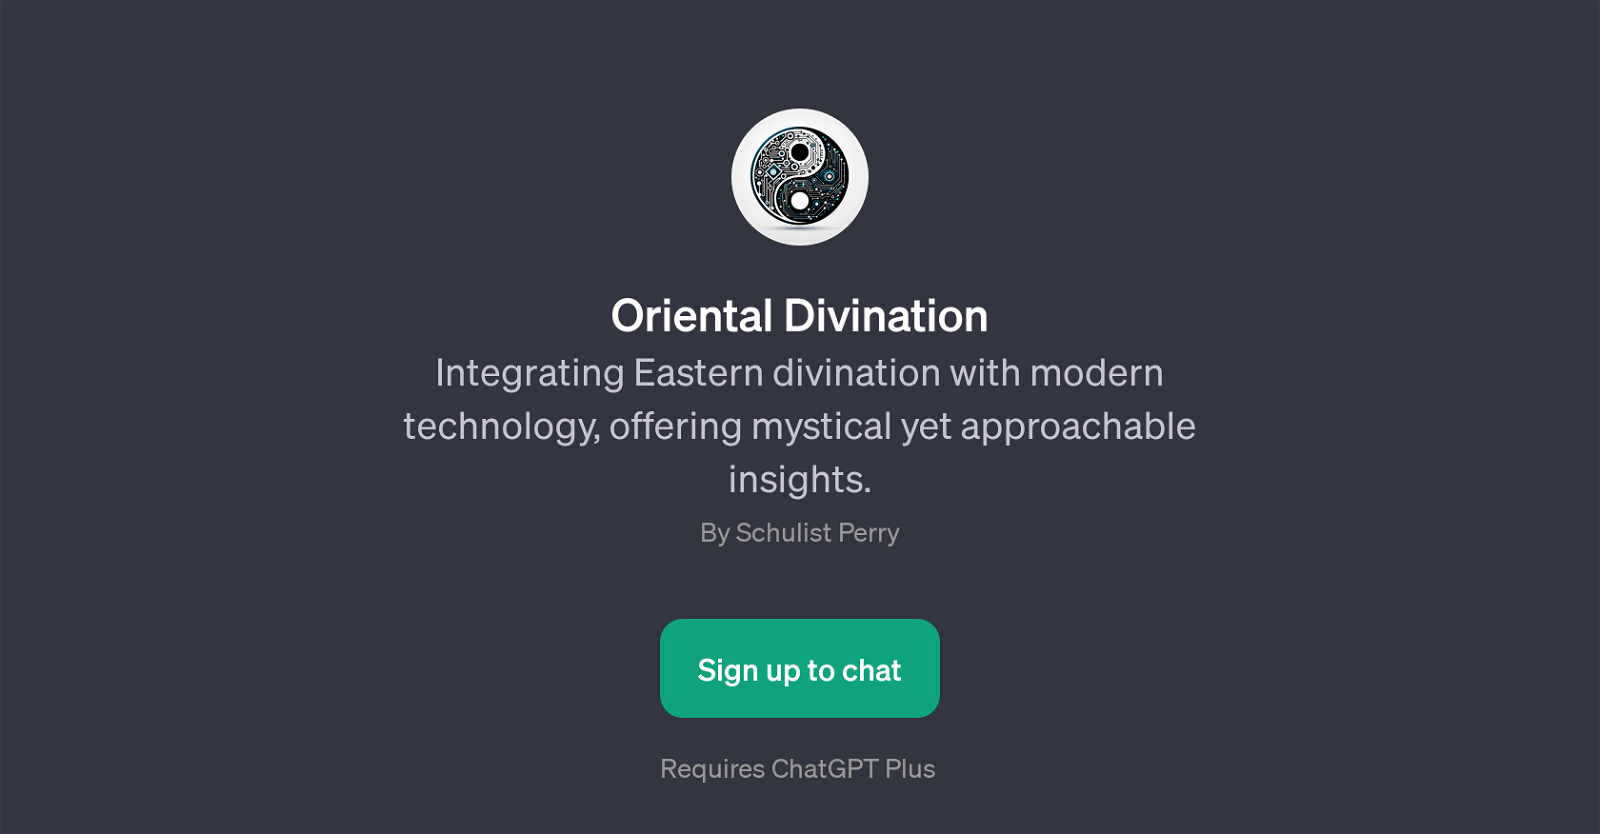 Oriental Divination website